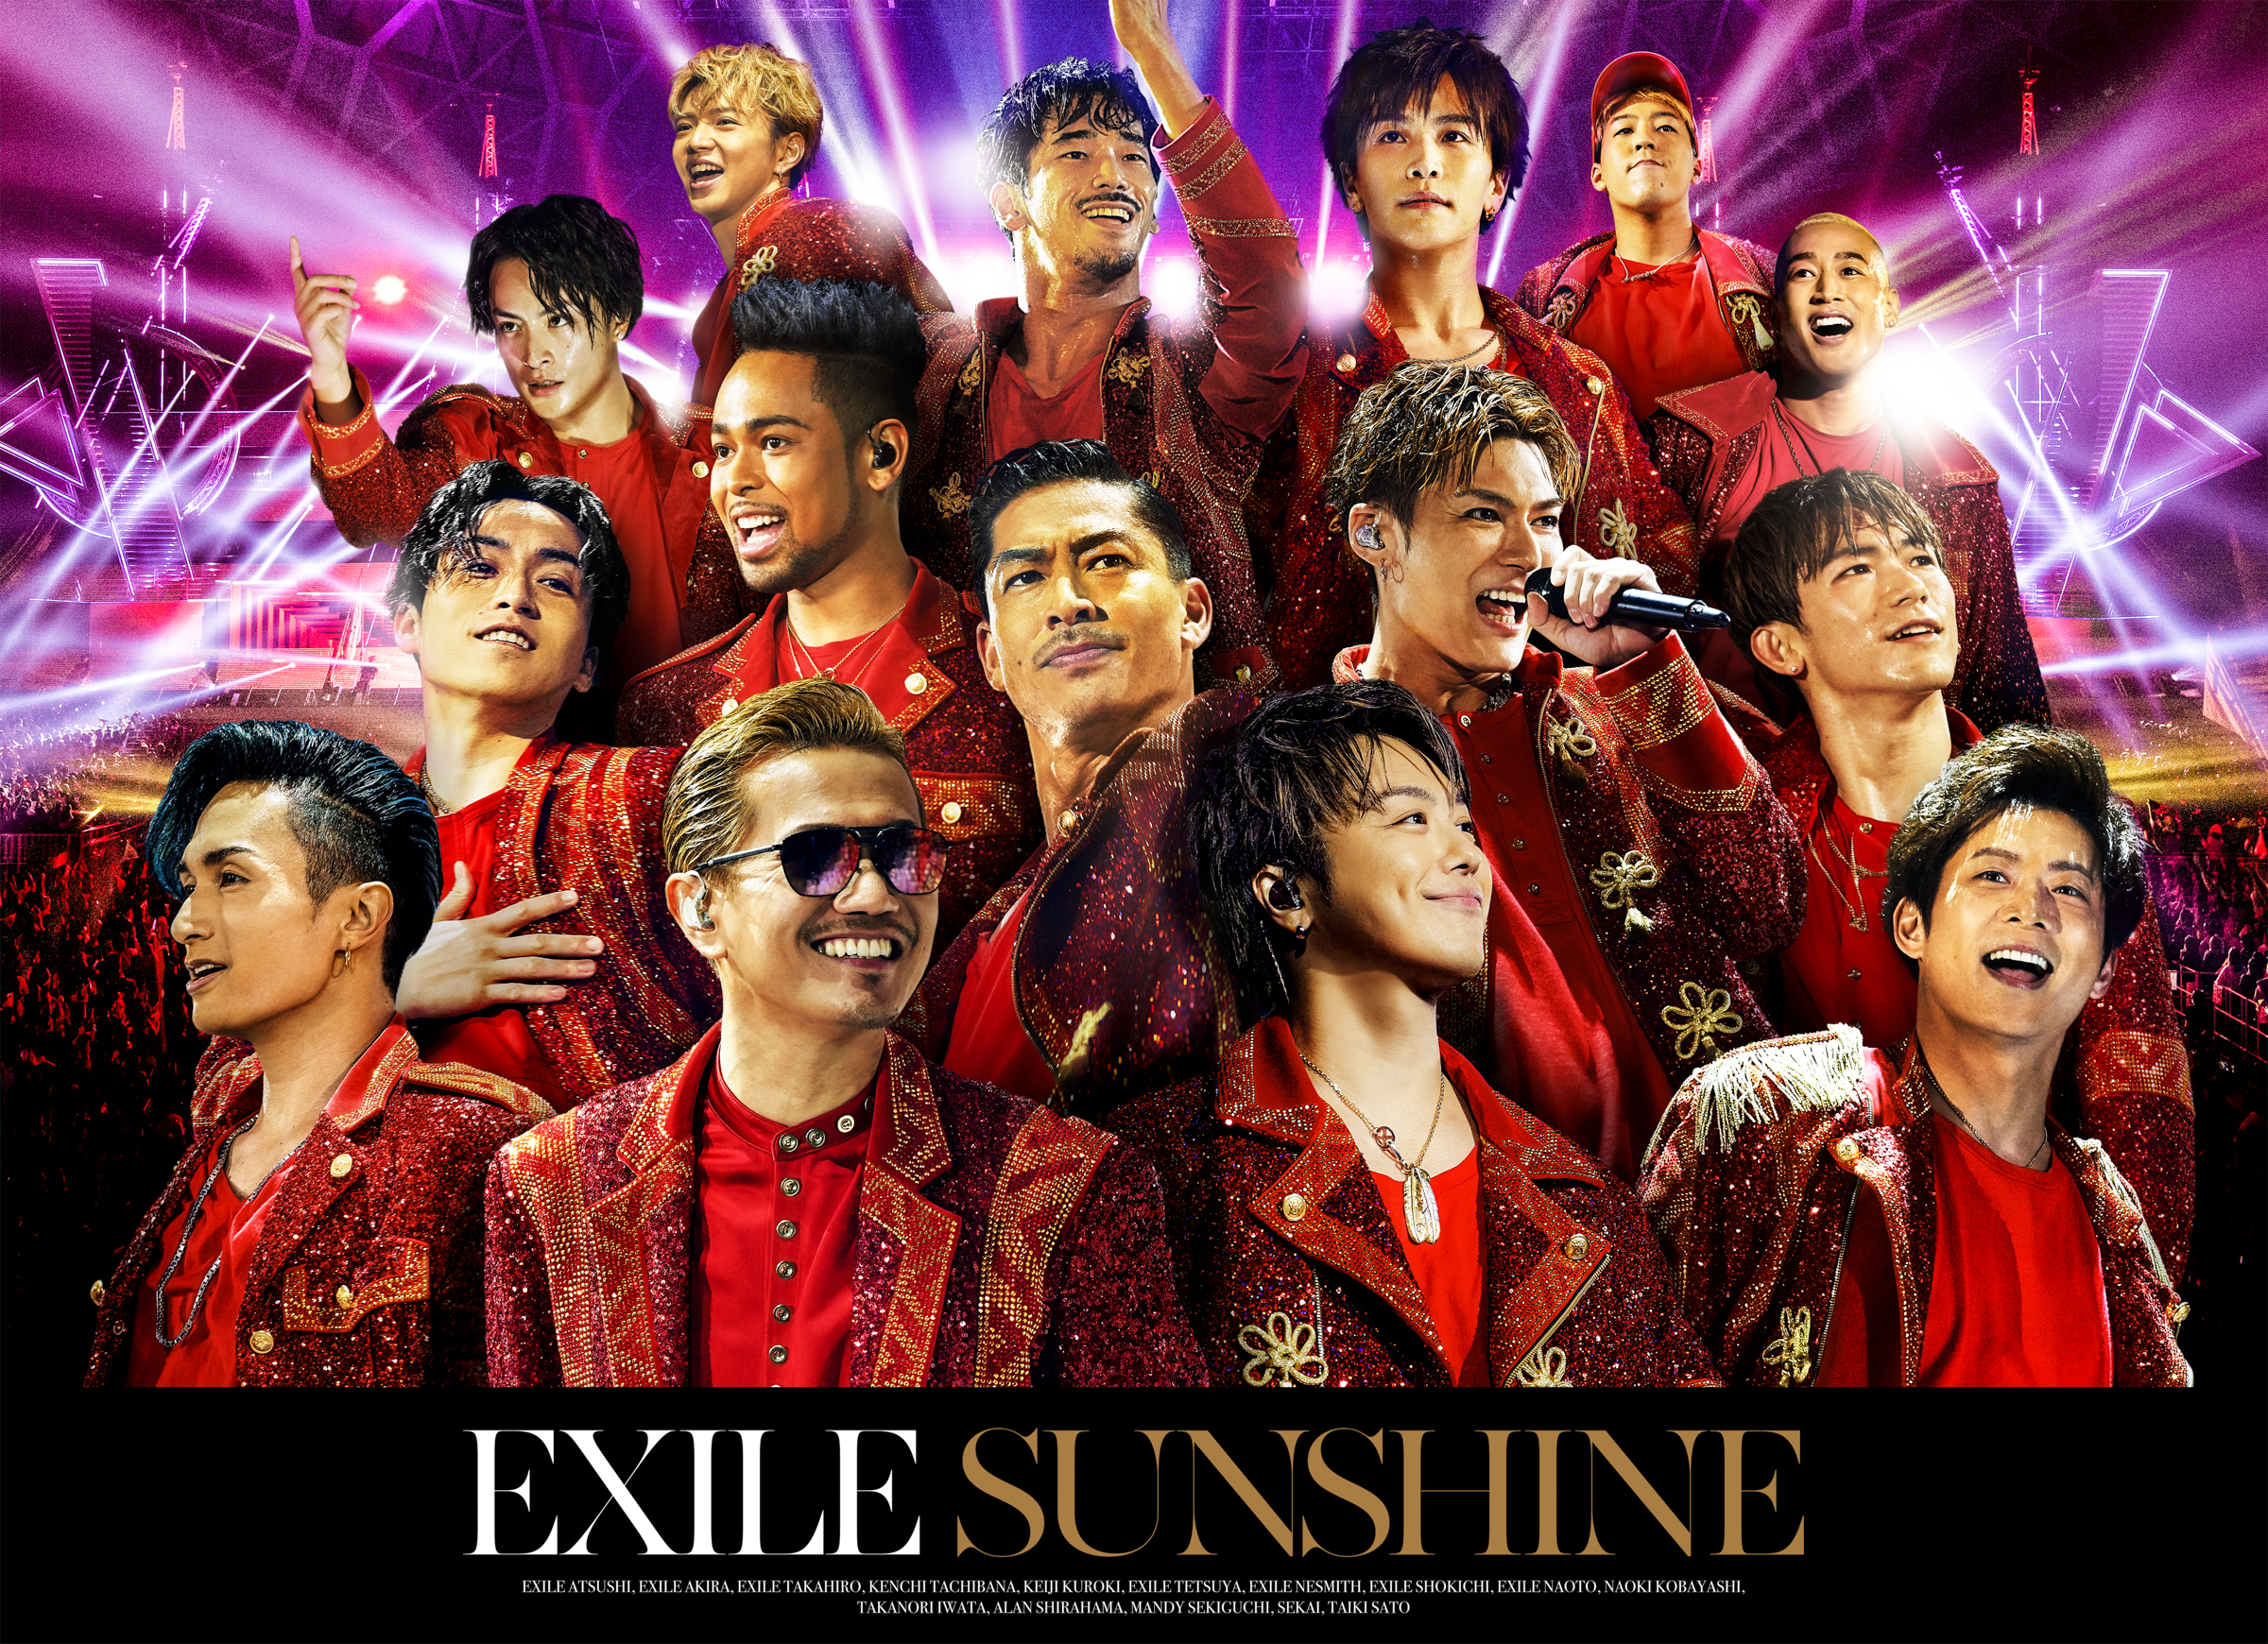 Exile New Single Sunshine 12 16 水 Release Exile Mobile